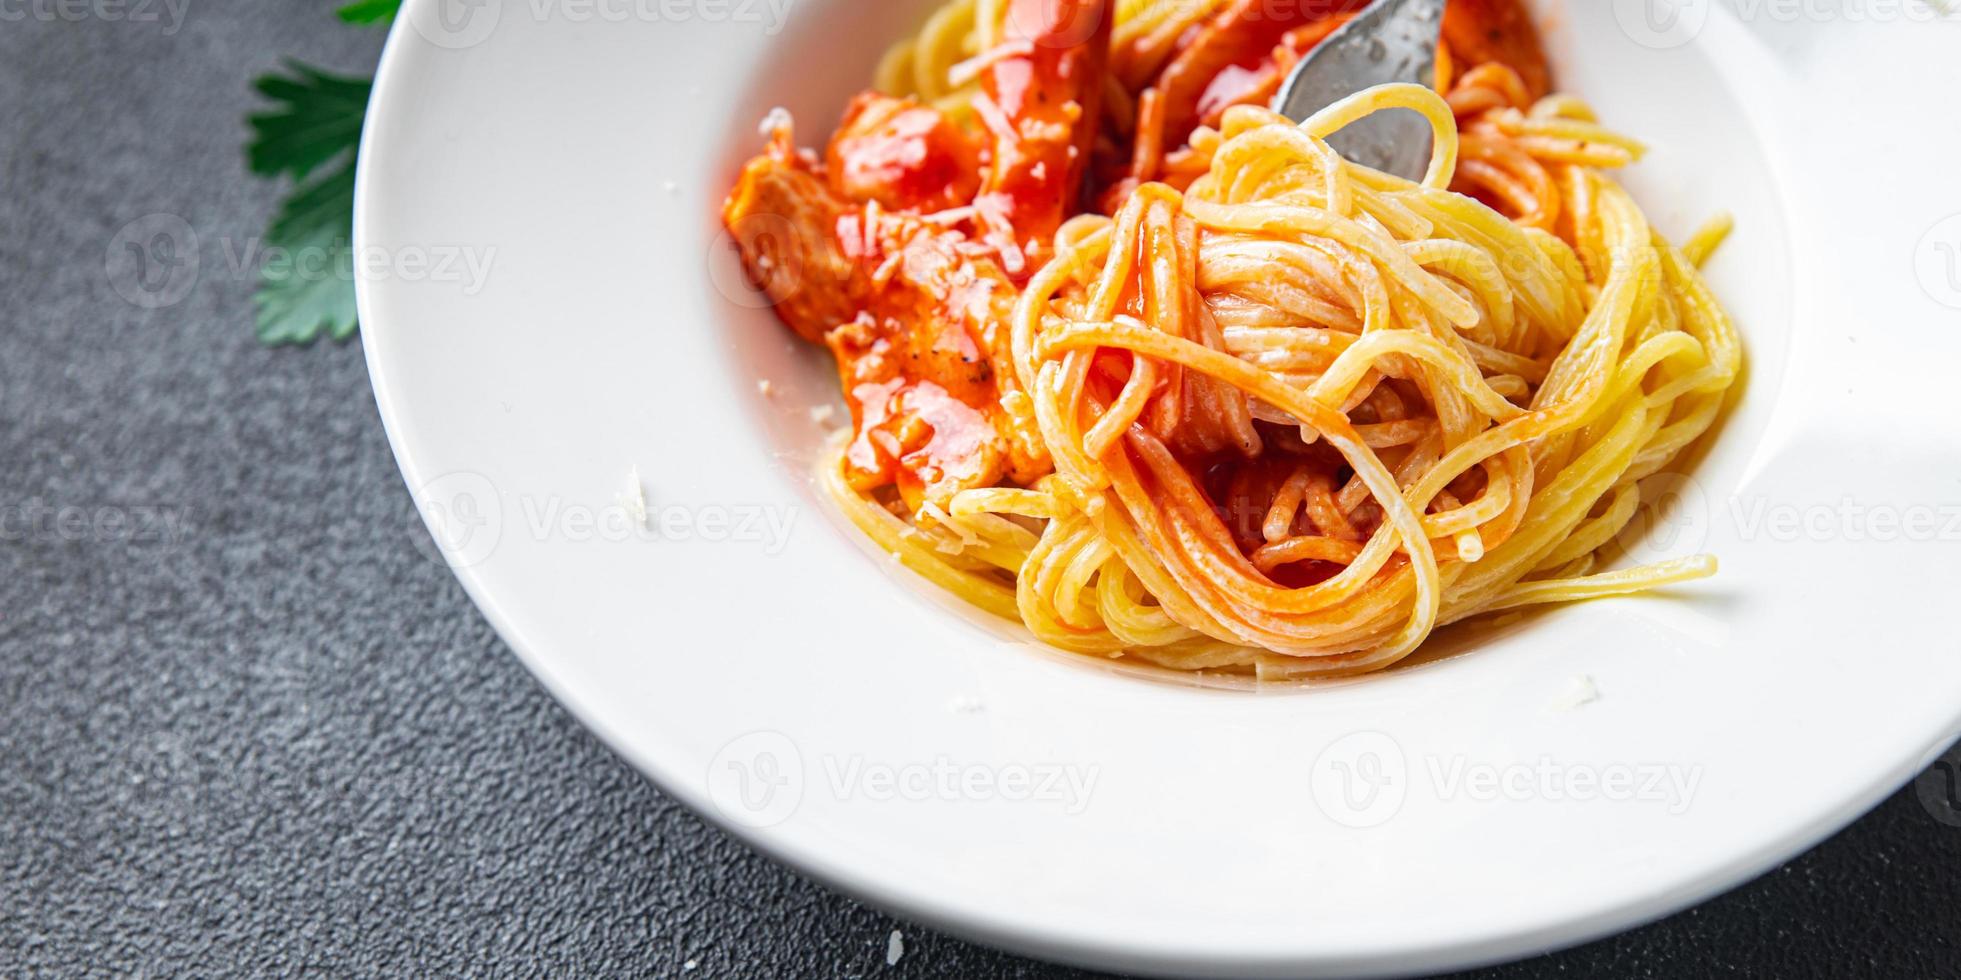 pâtes spaghetti sauce tomate poulet viande ou dinde sain photo